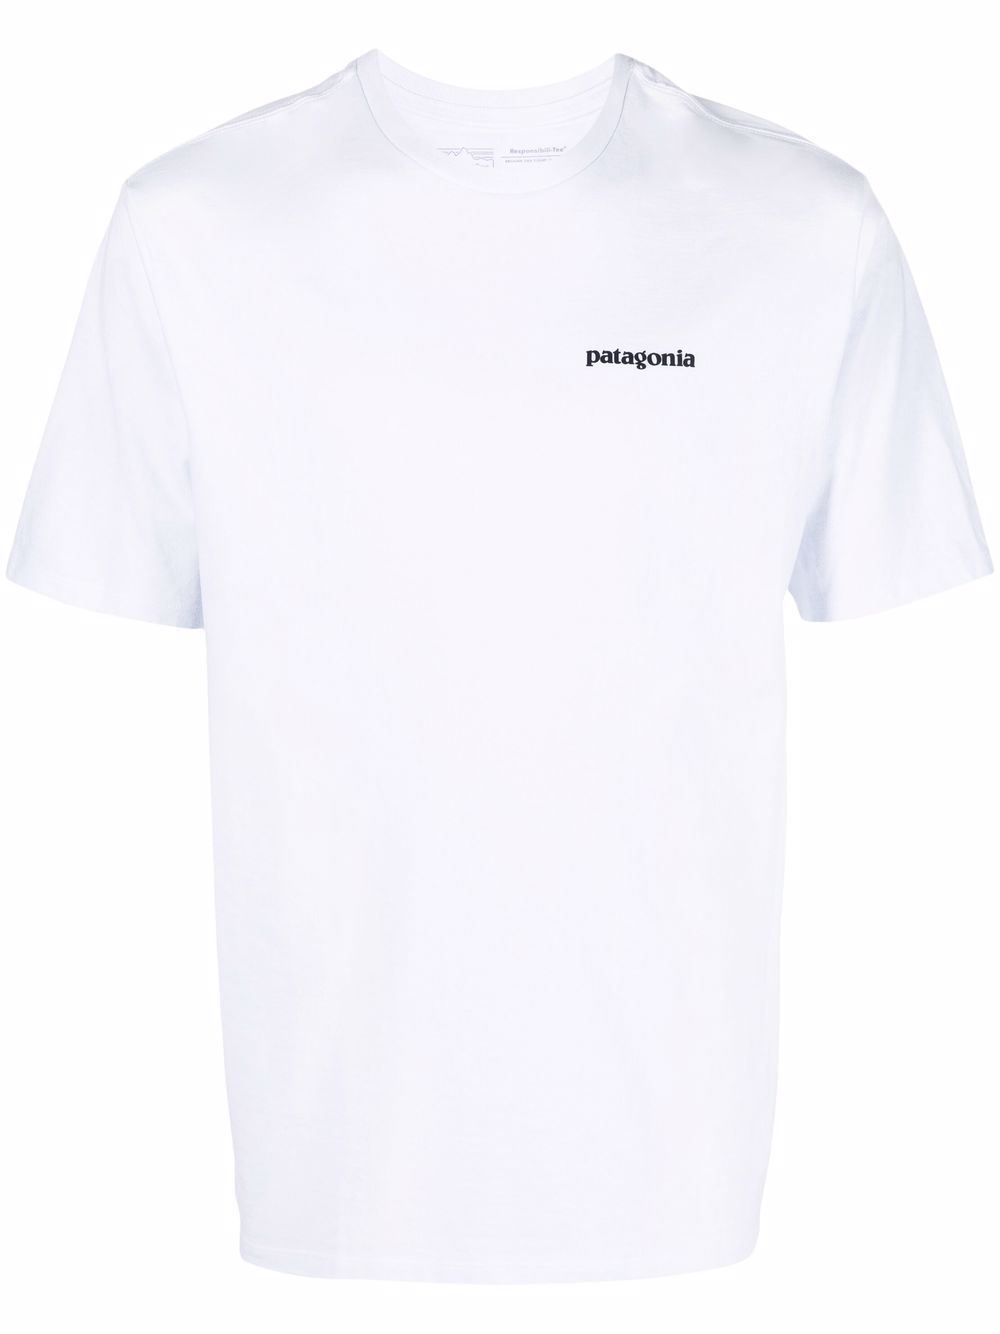 фото Patagonia футболка с логотипом